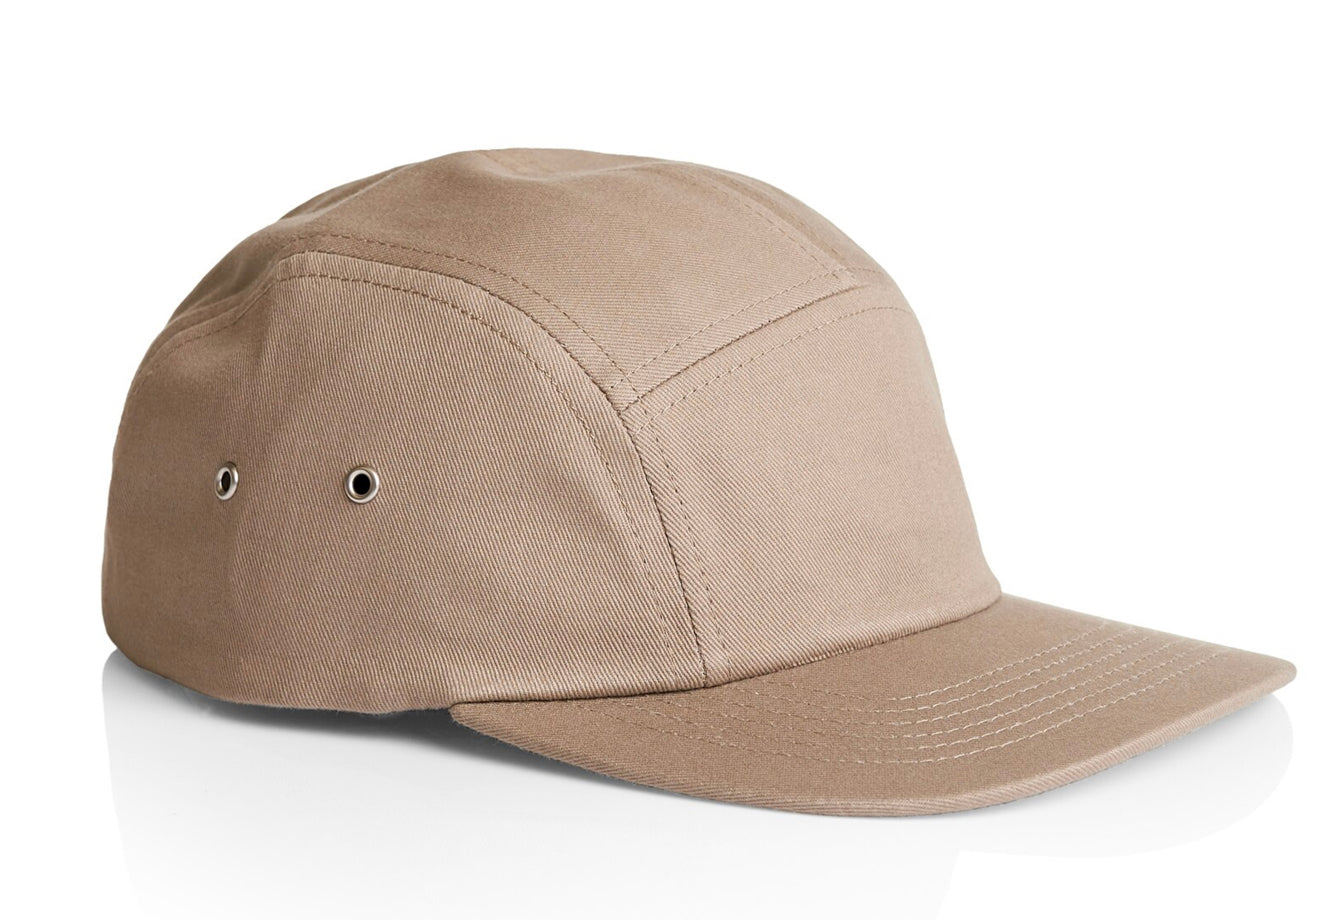 PINK/GREEN ILLUSIVE LOGO - HATS/CAPS - BEANIES - BUCKET HATS